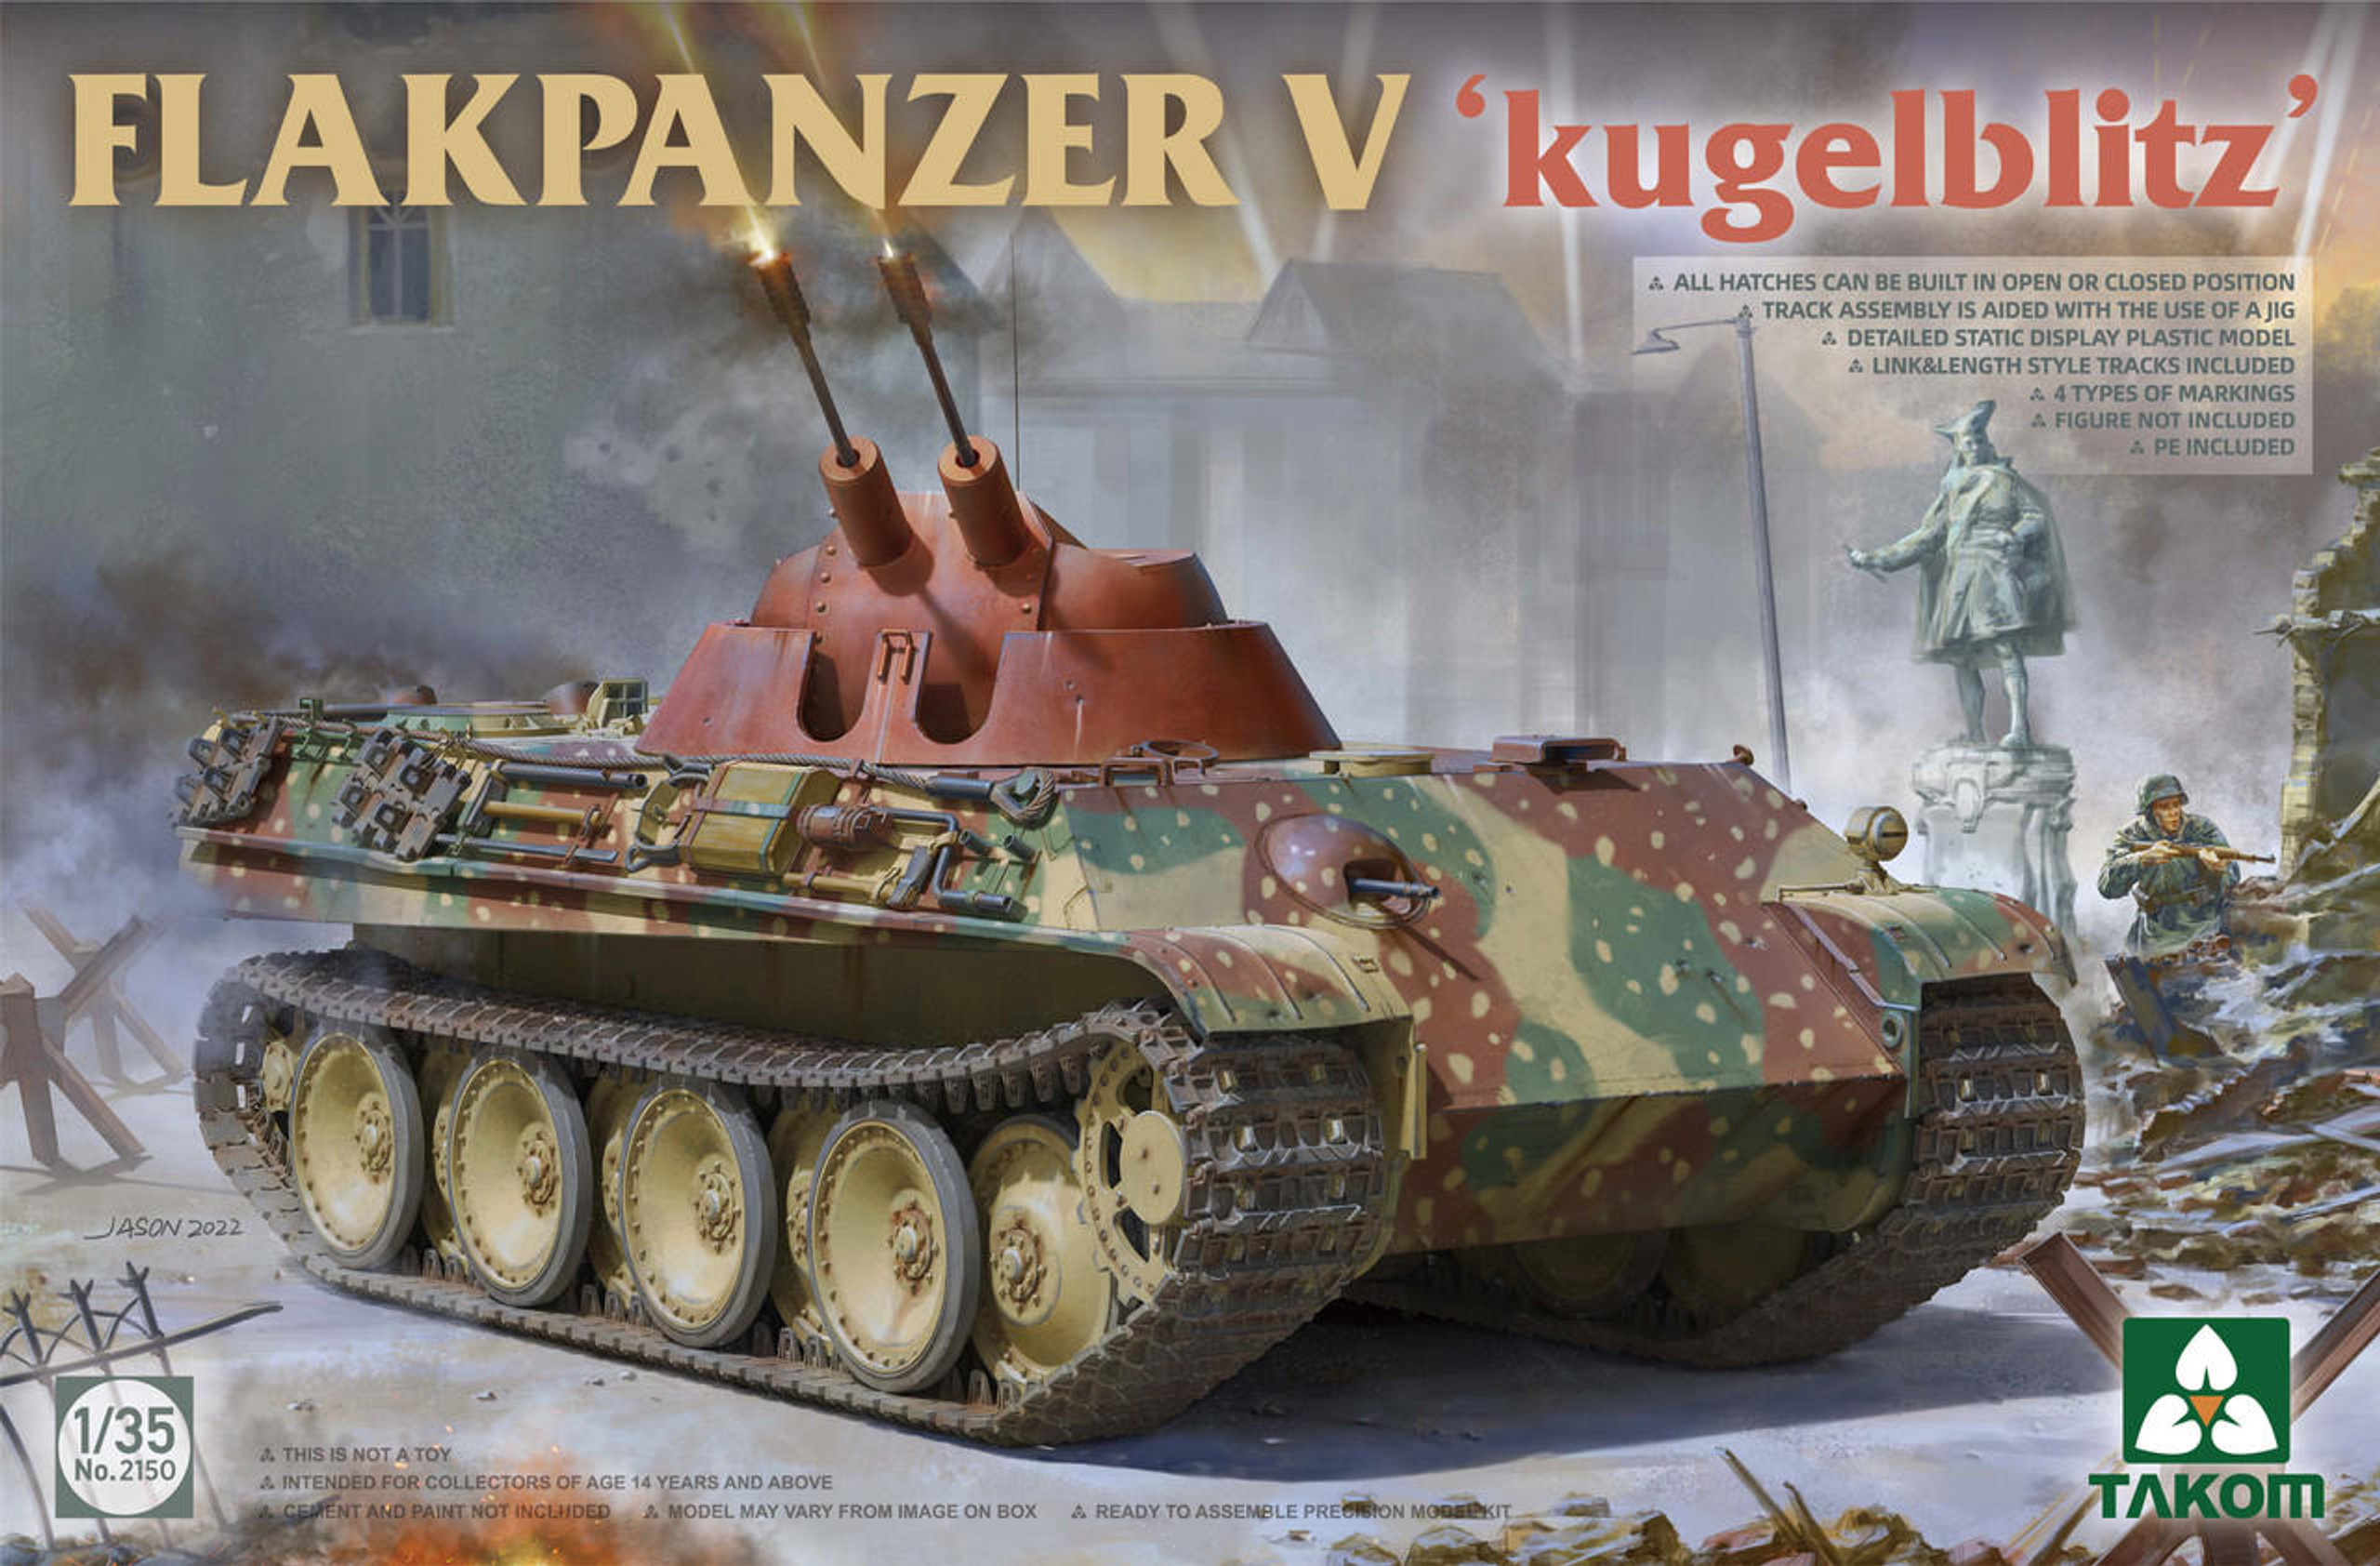 1/35 Takom Flakpanzer V 'kugelblitz' - Squadron.com